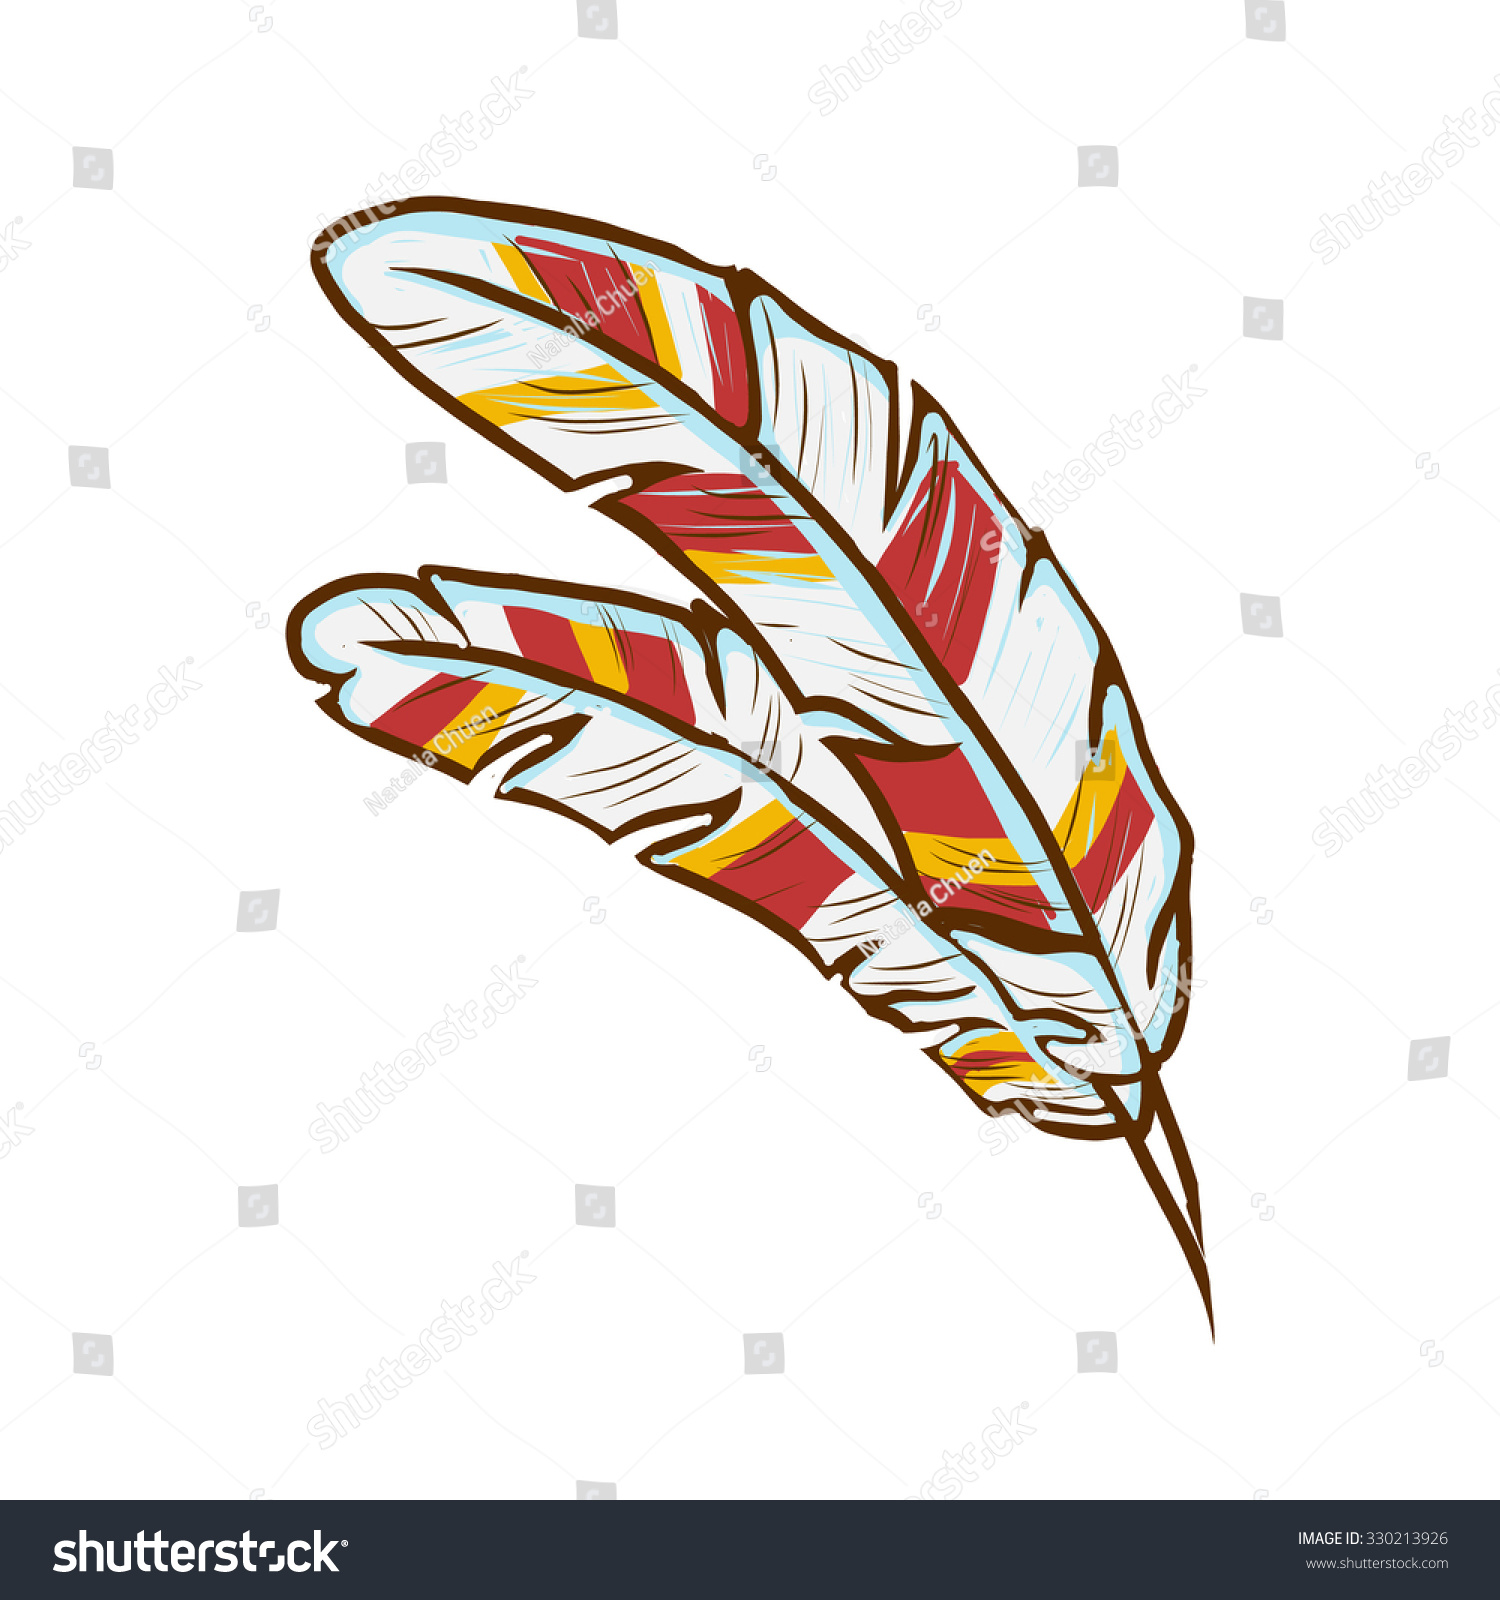 Cartoon Feathers On White Background. Stock Photo 330213926 : Shutterstock